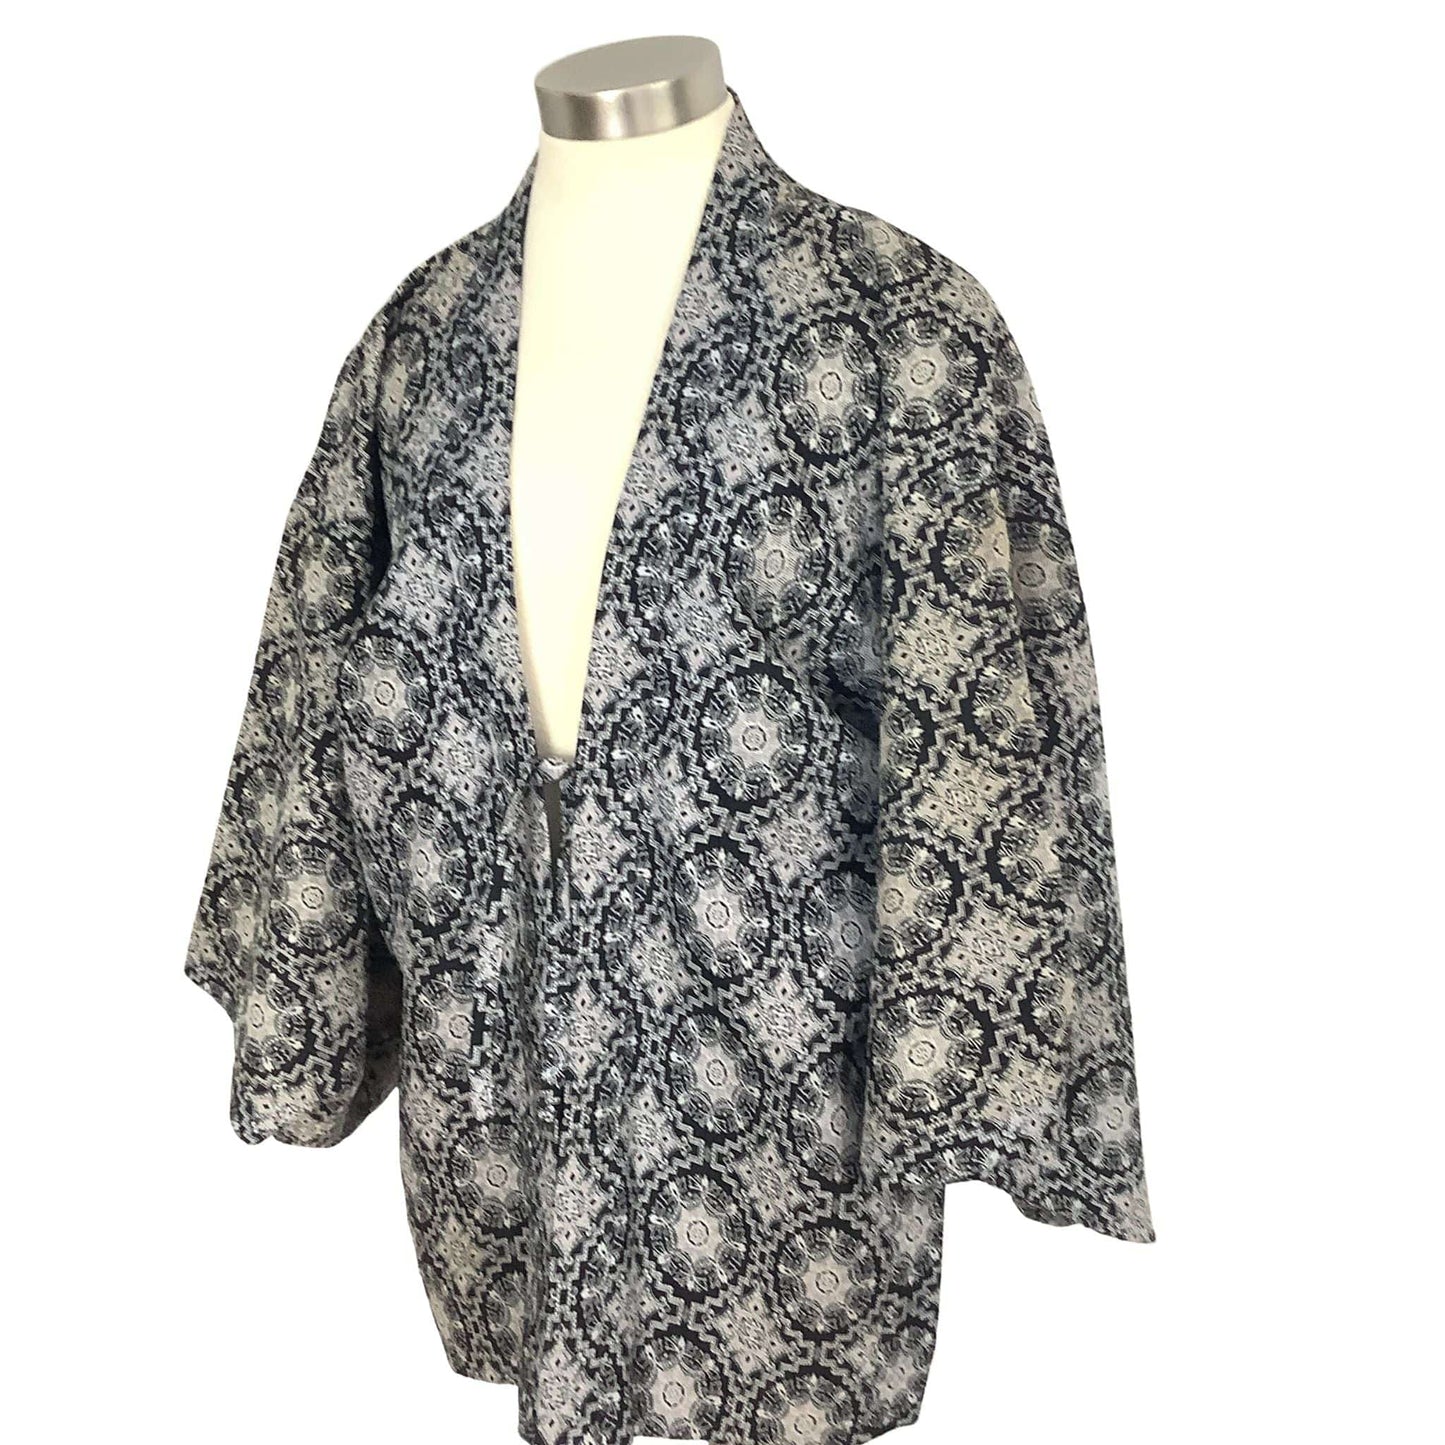 Vintage Kimono Jacket